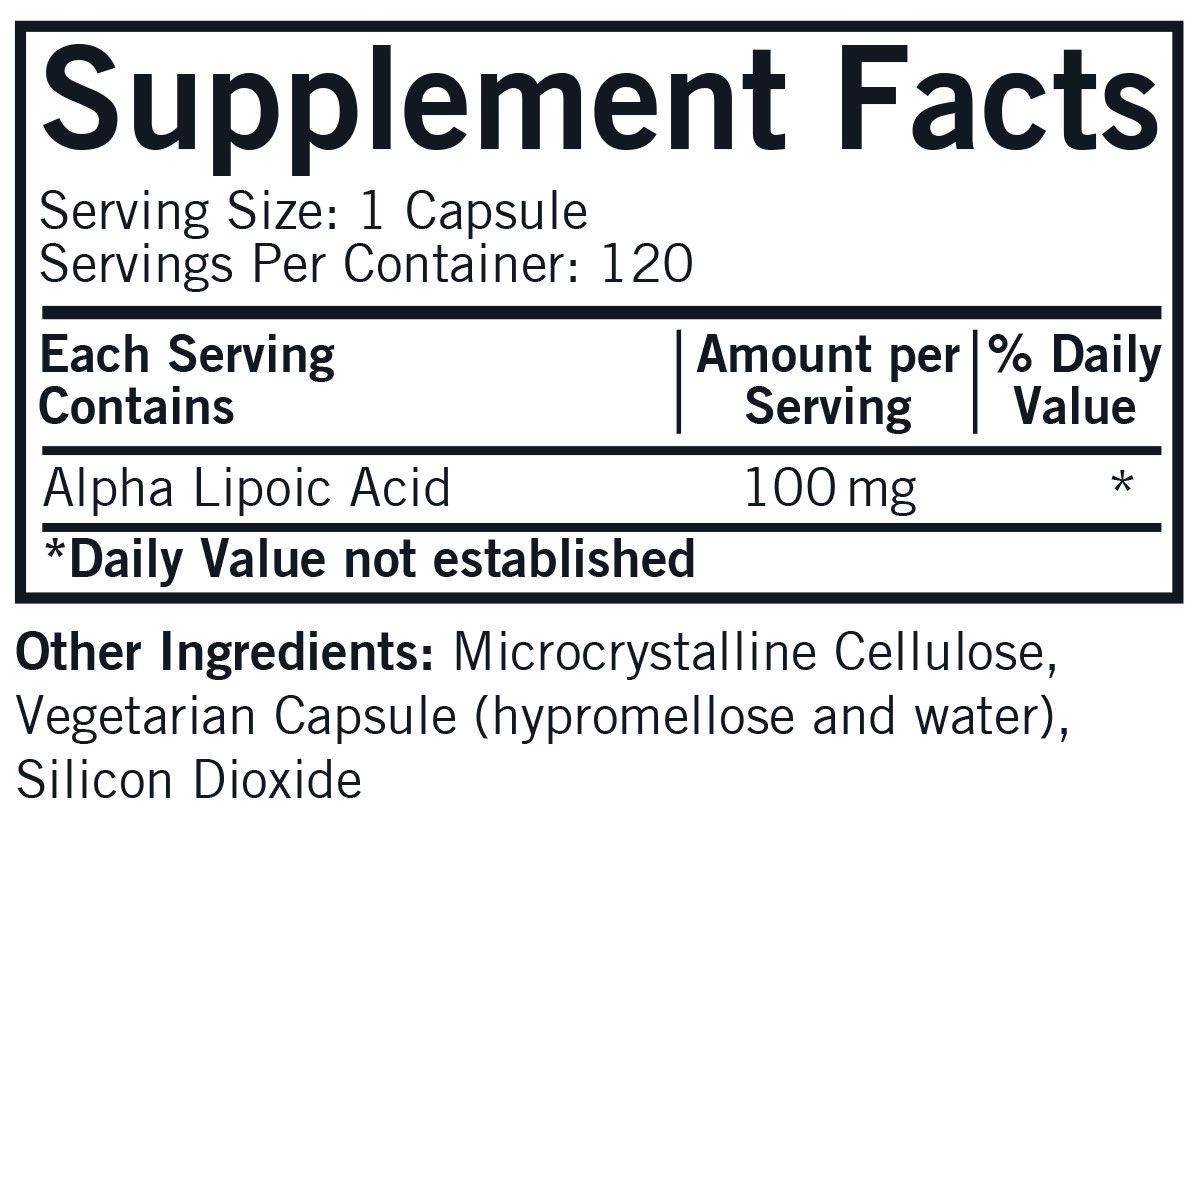 Alpha Lipoic Acid 100 mg - Hypoallergenic